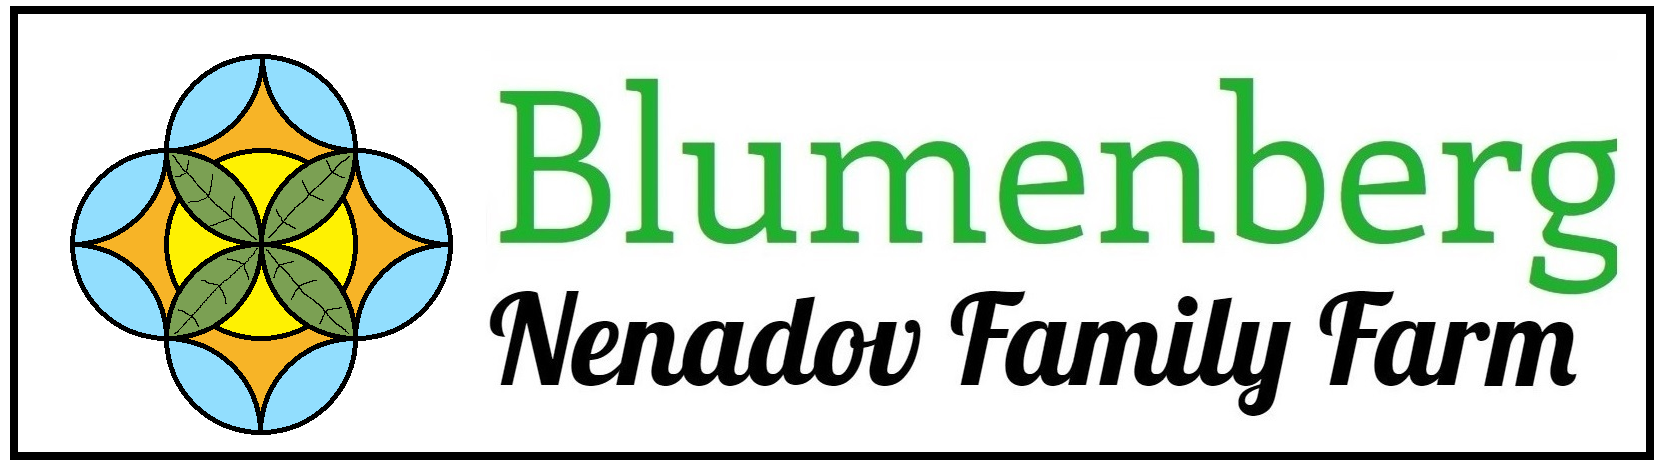  blumenbergfarm.com 